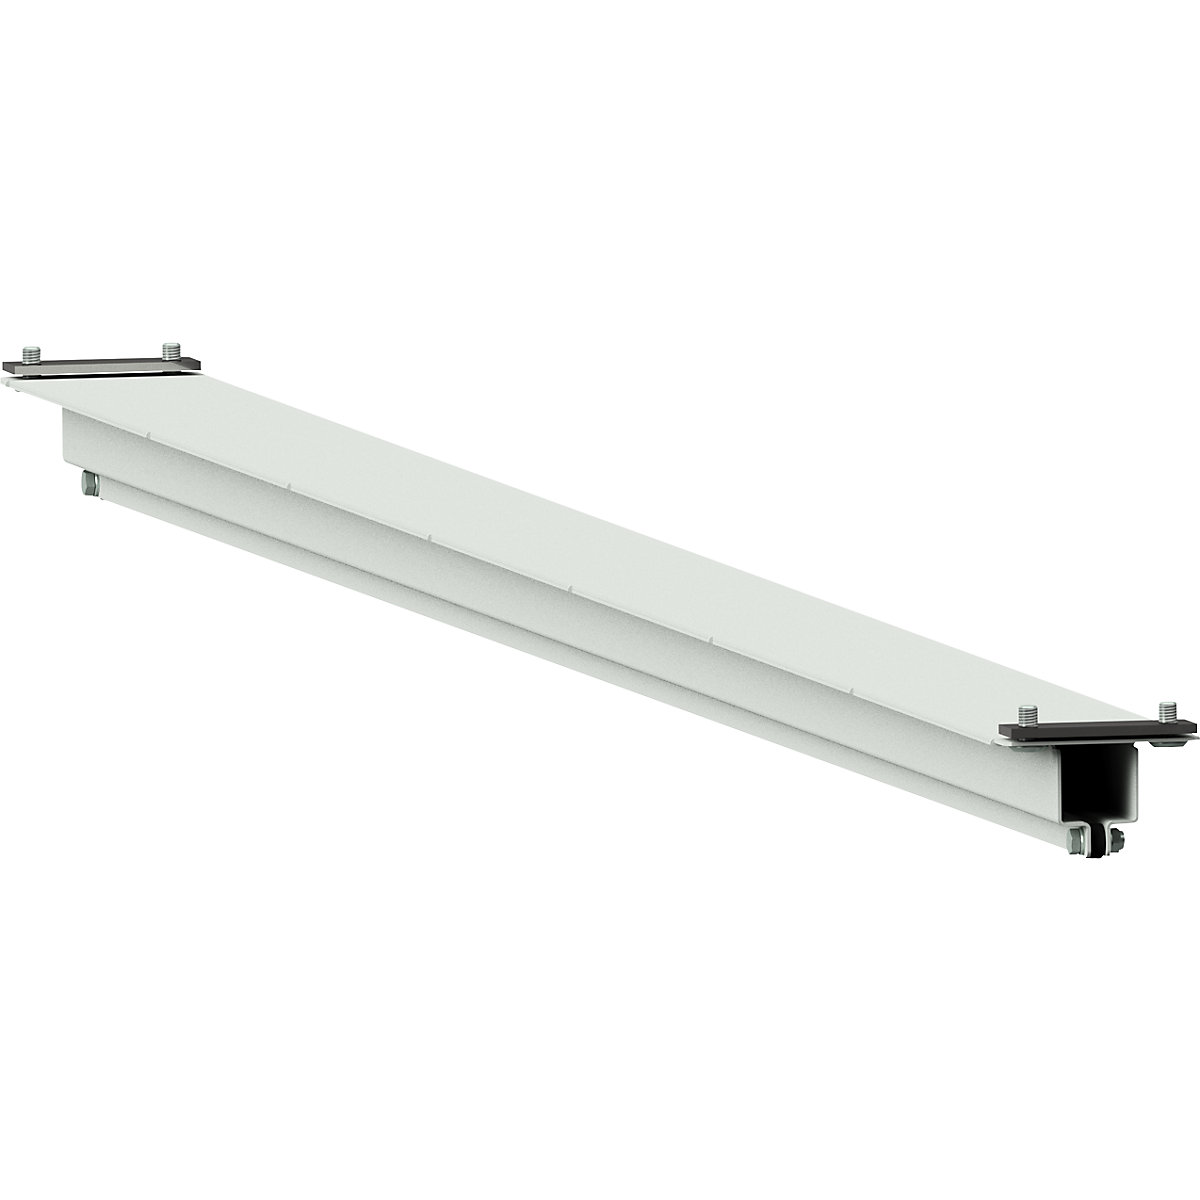 ANKE – Suspension rail for modular system, light grey, for bench width 2000 mm